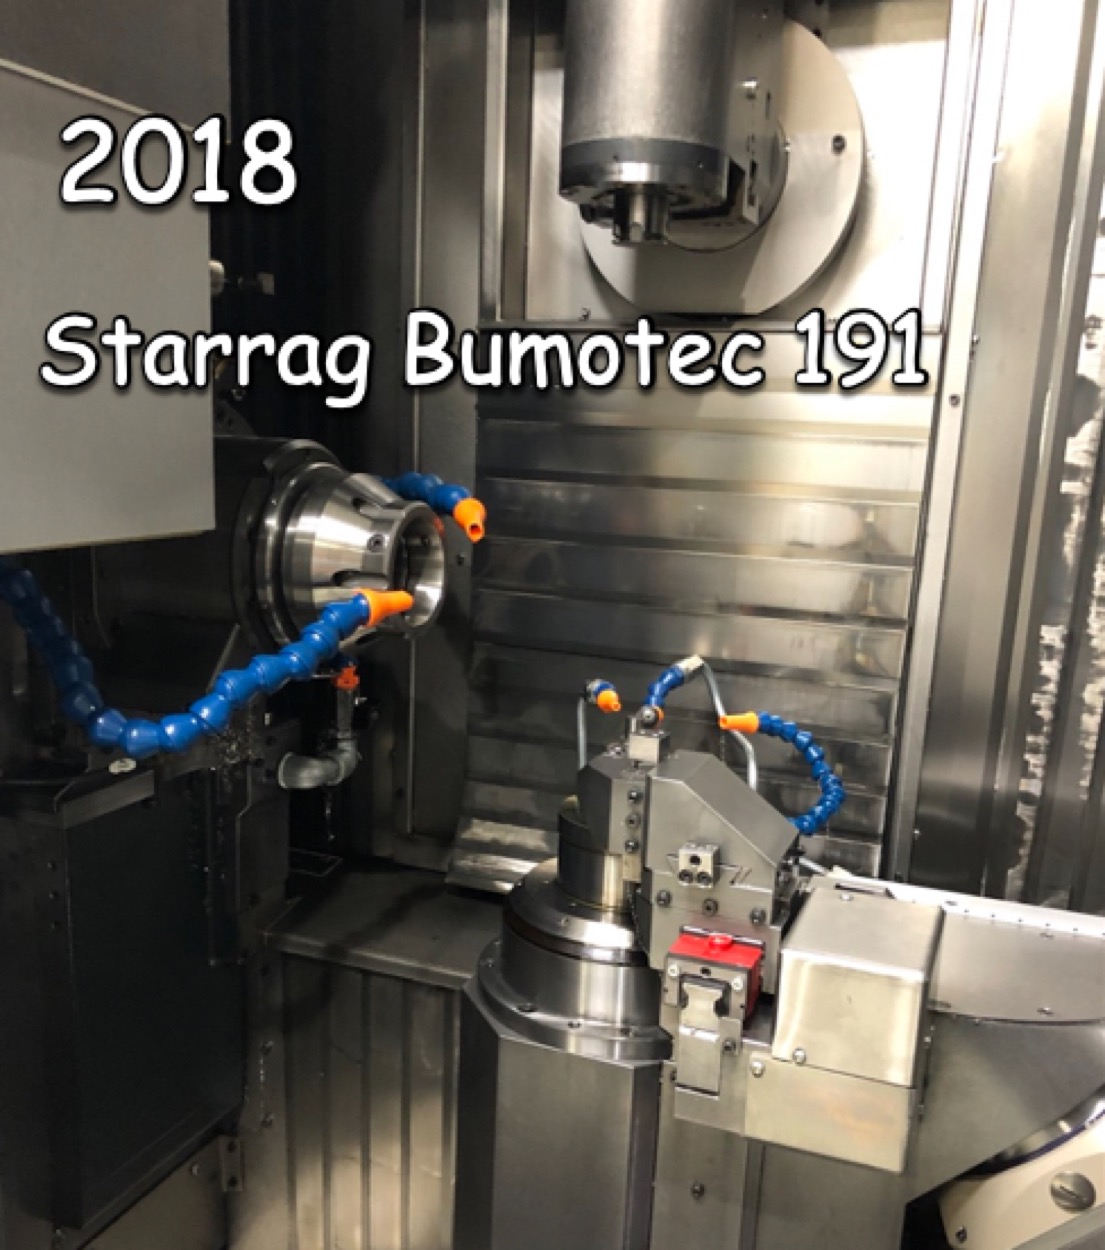 Starrag Bumotec S191RP 2018